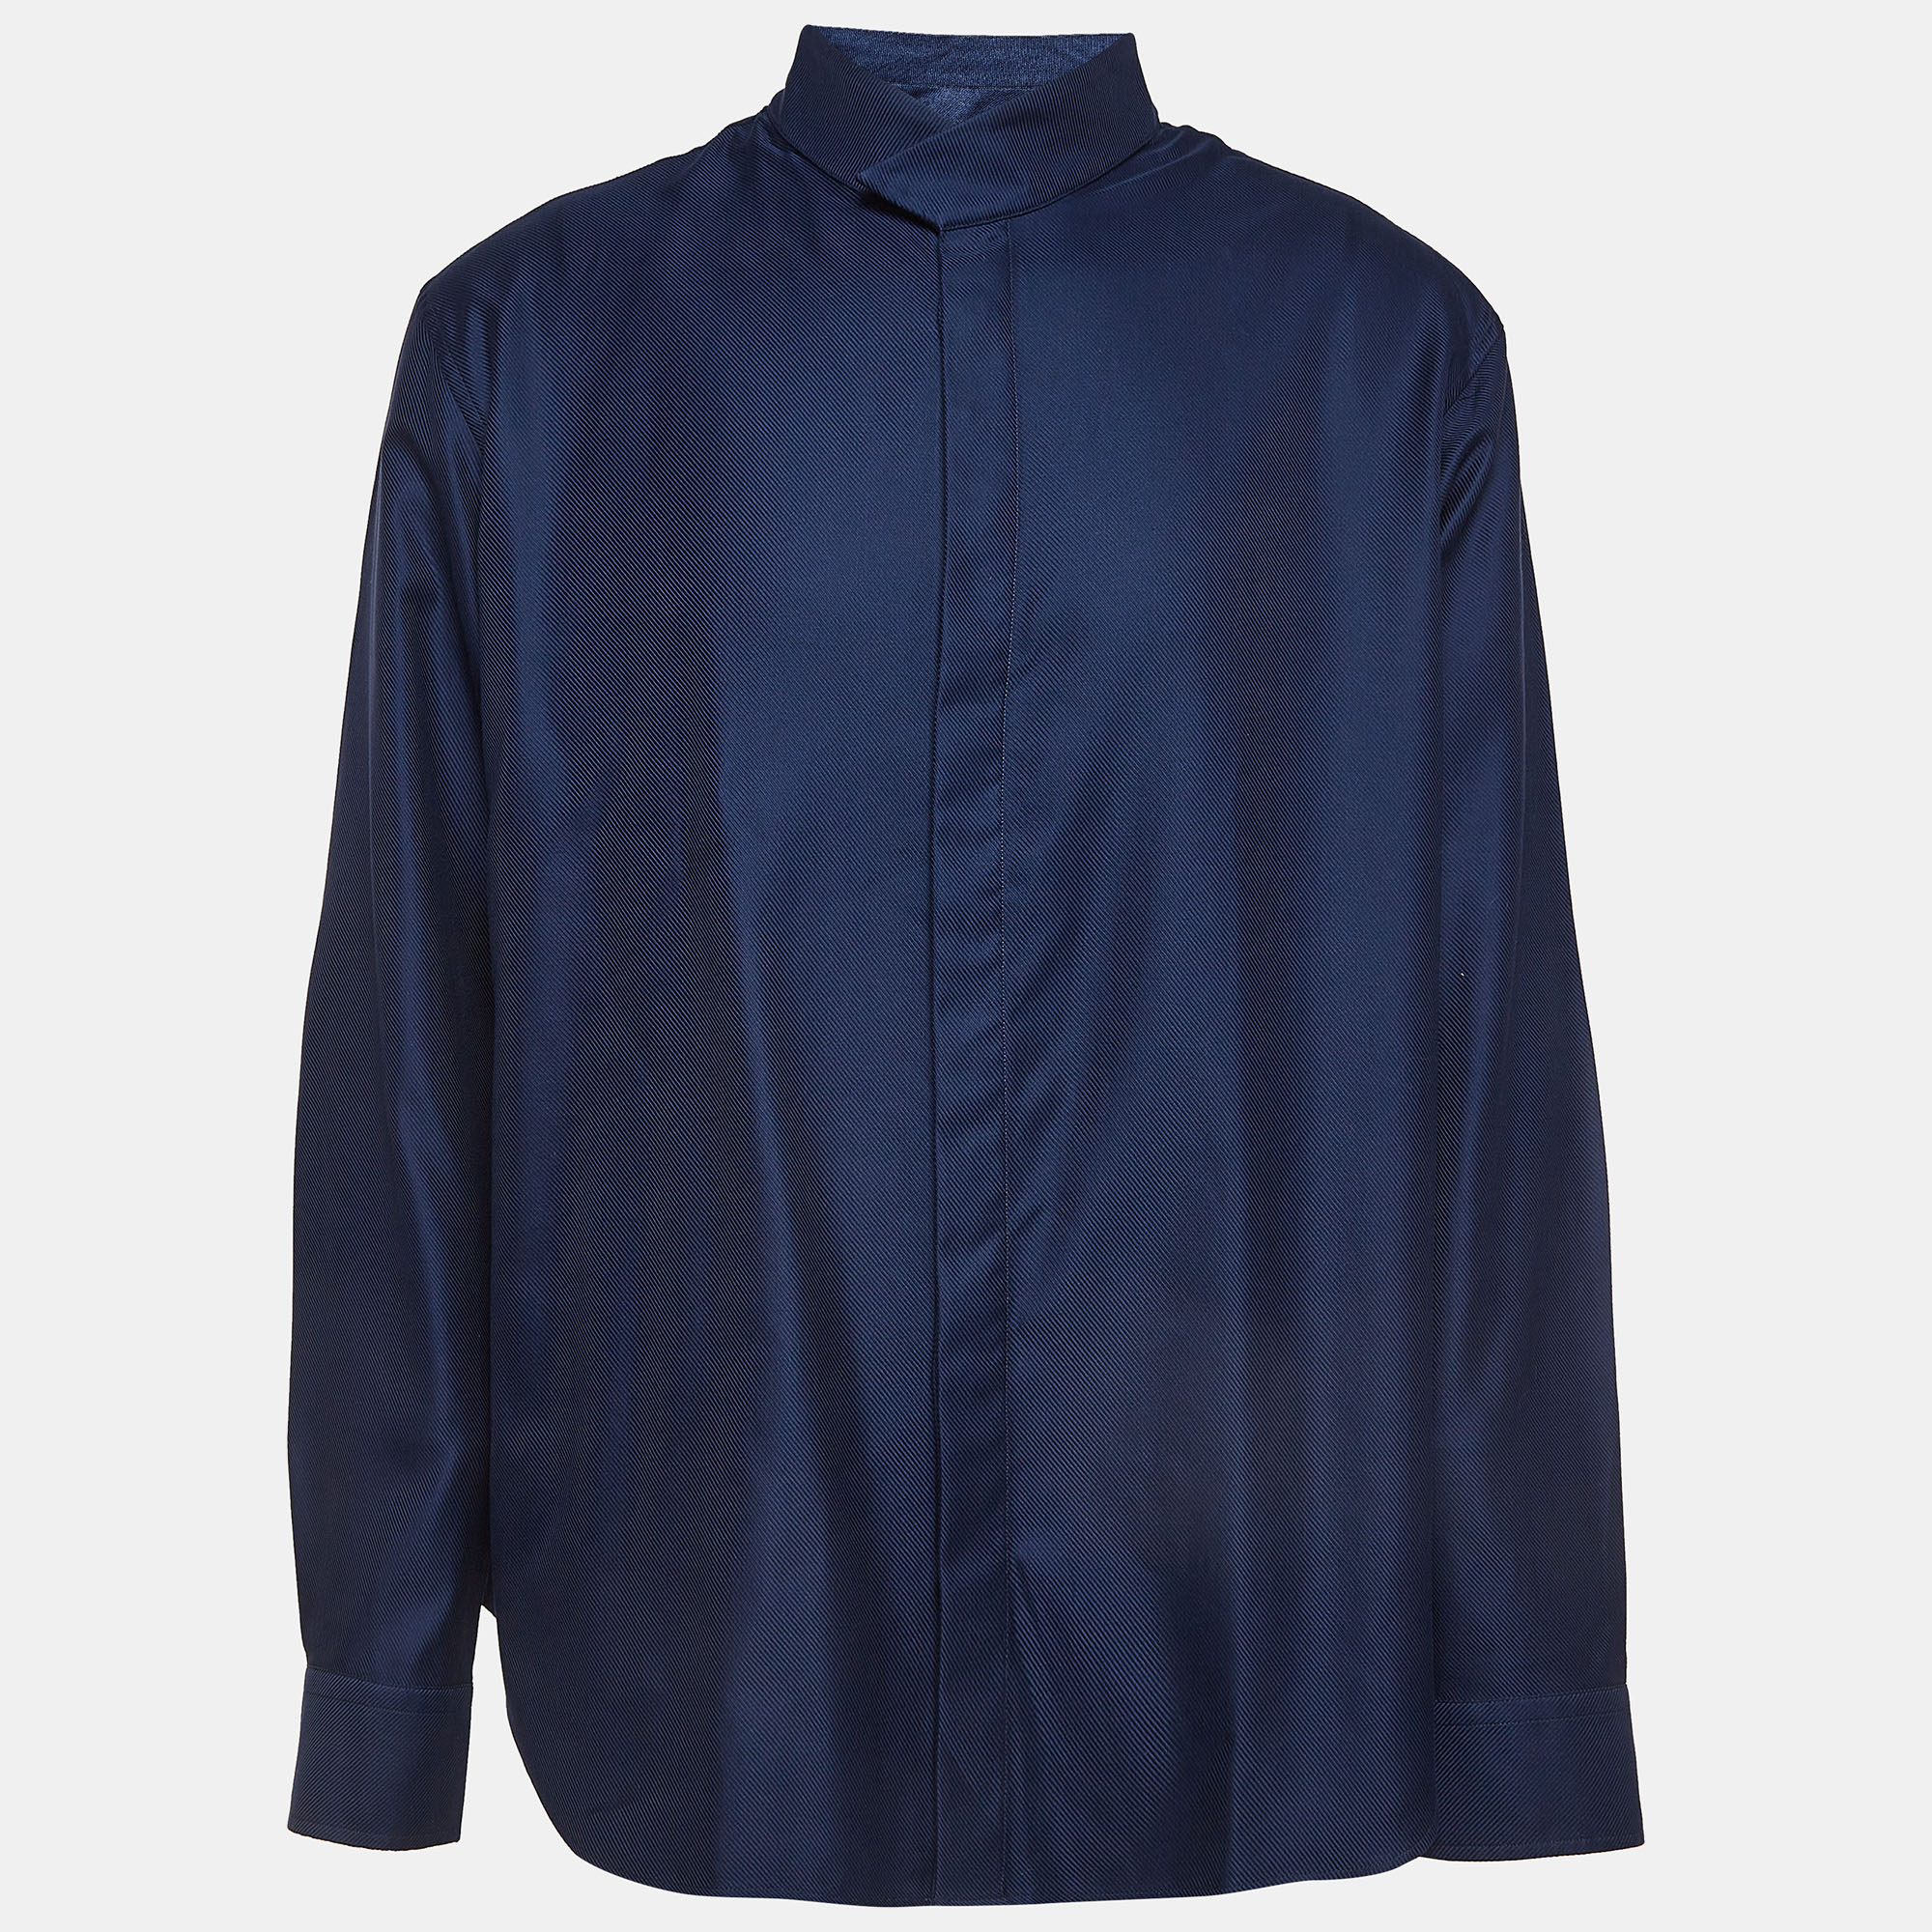 Giorgio armani navy blue cotton twill shirt 4xl